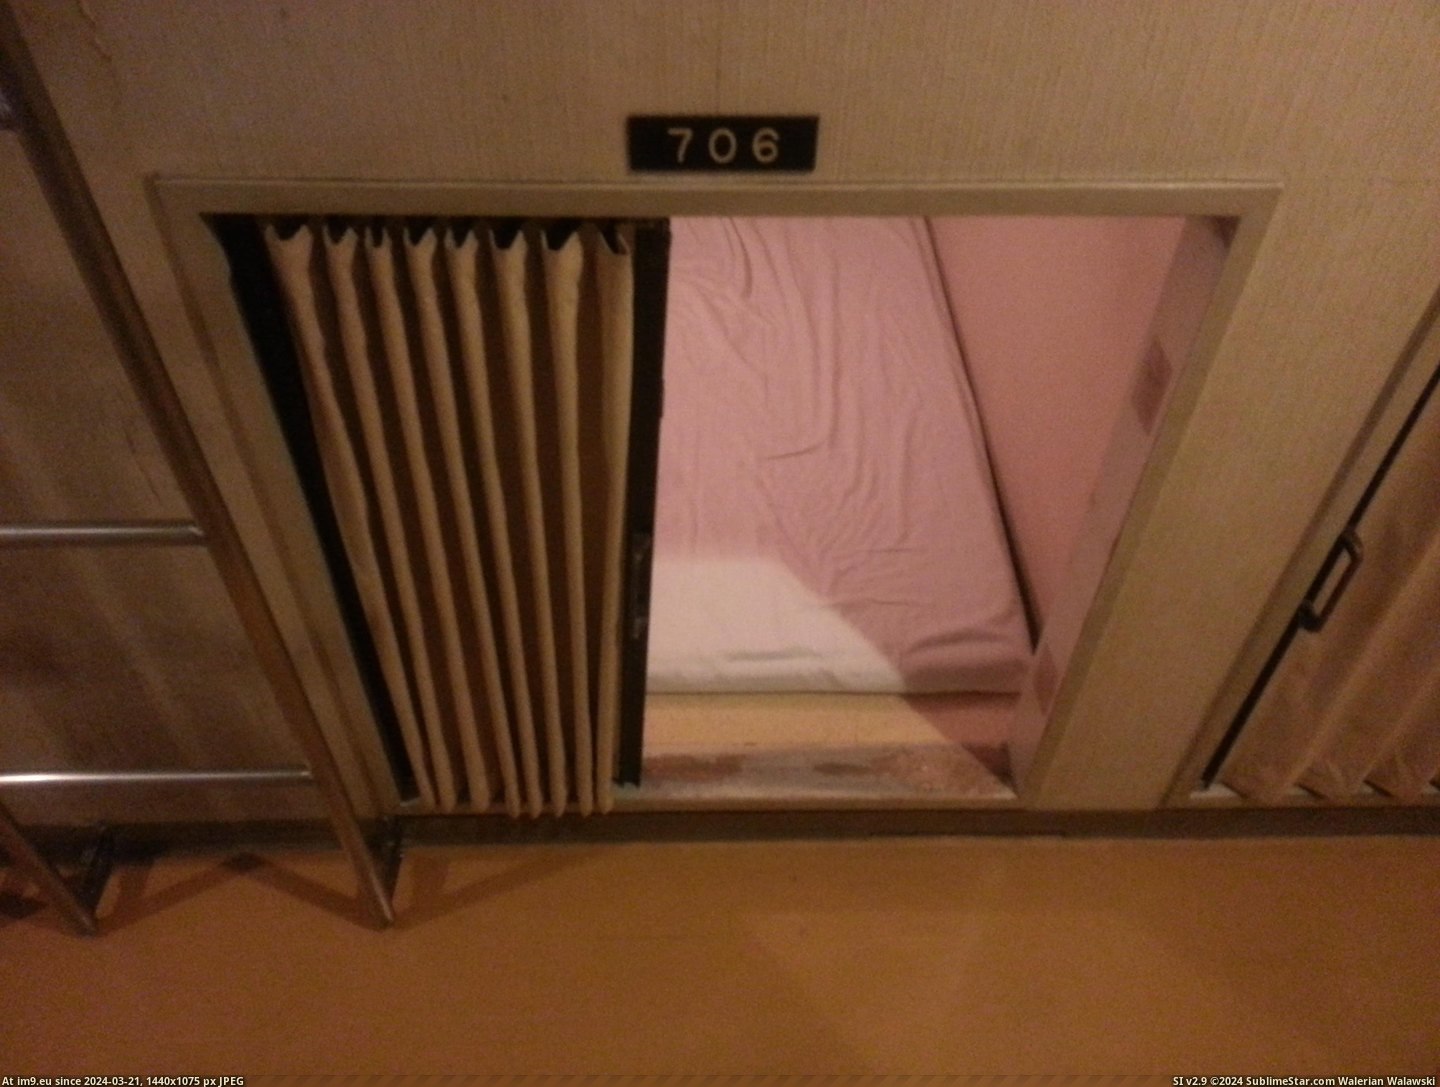 #Long #Hotel #Capsule #Week #Tokyo [Pics] My week-long home at a Tokyo capsule hotel 2 Pic. (Bild von album My r/PICS favs))